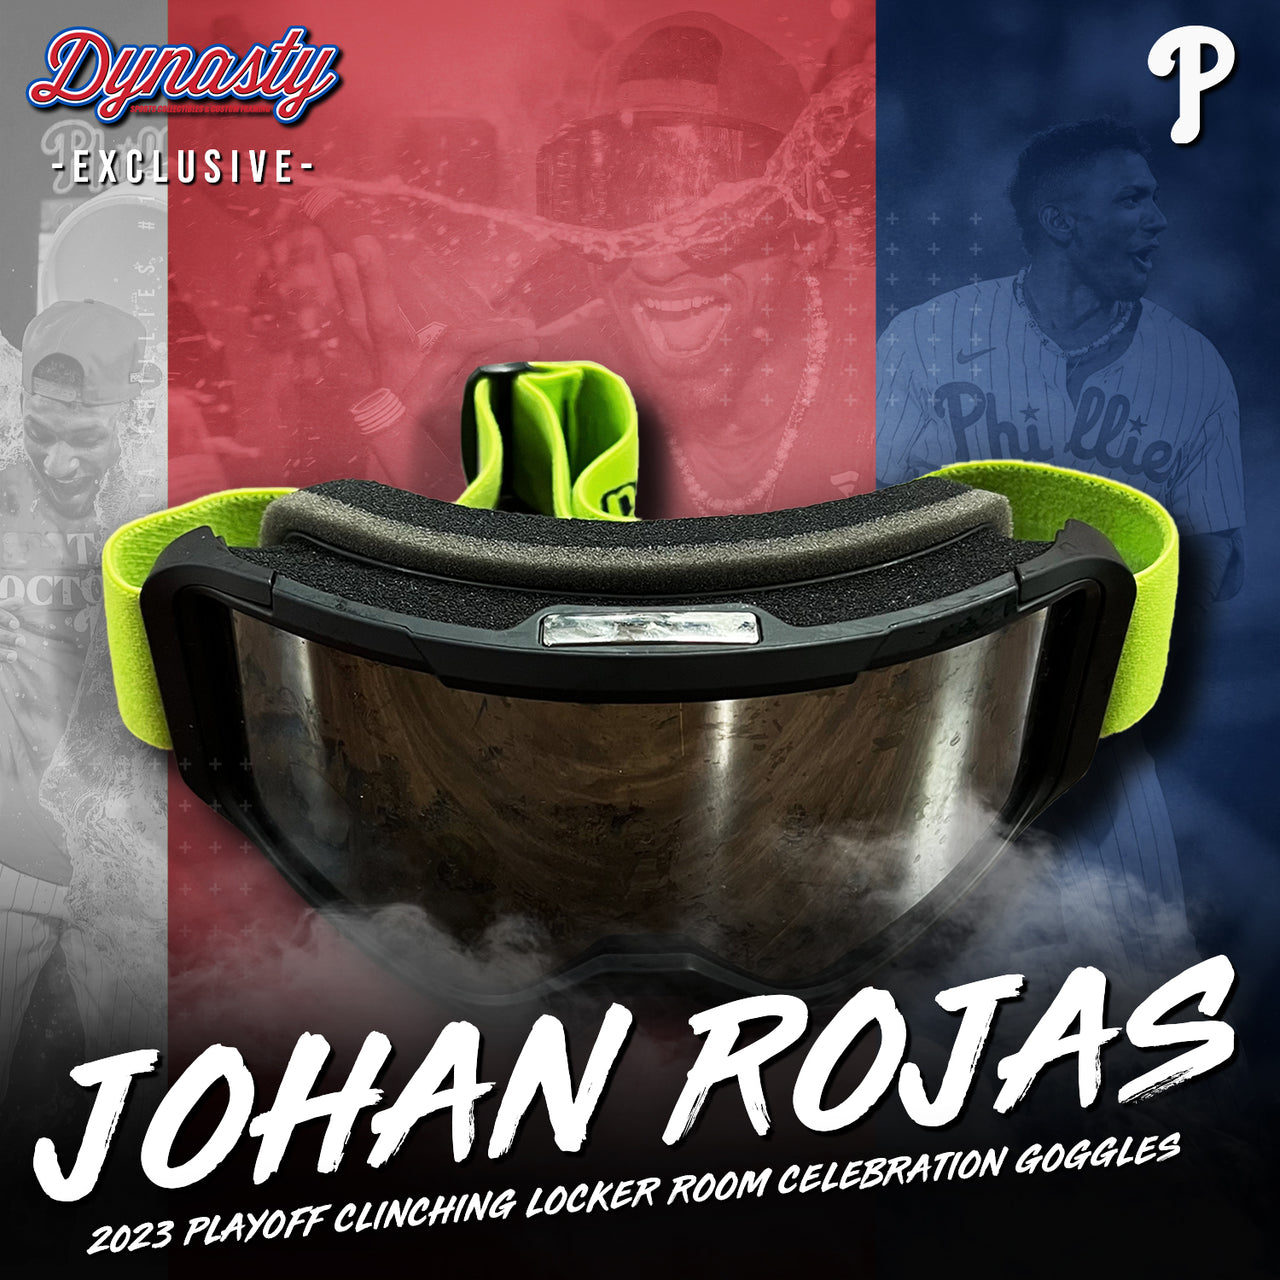 Johan Rojas Philadelphia Phillies Locker Room Celebration Goggles